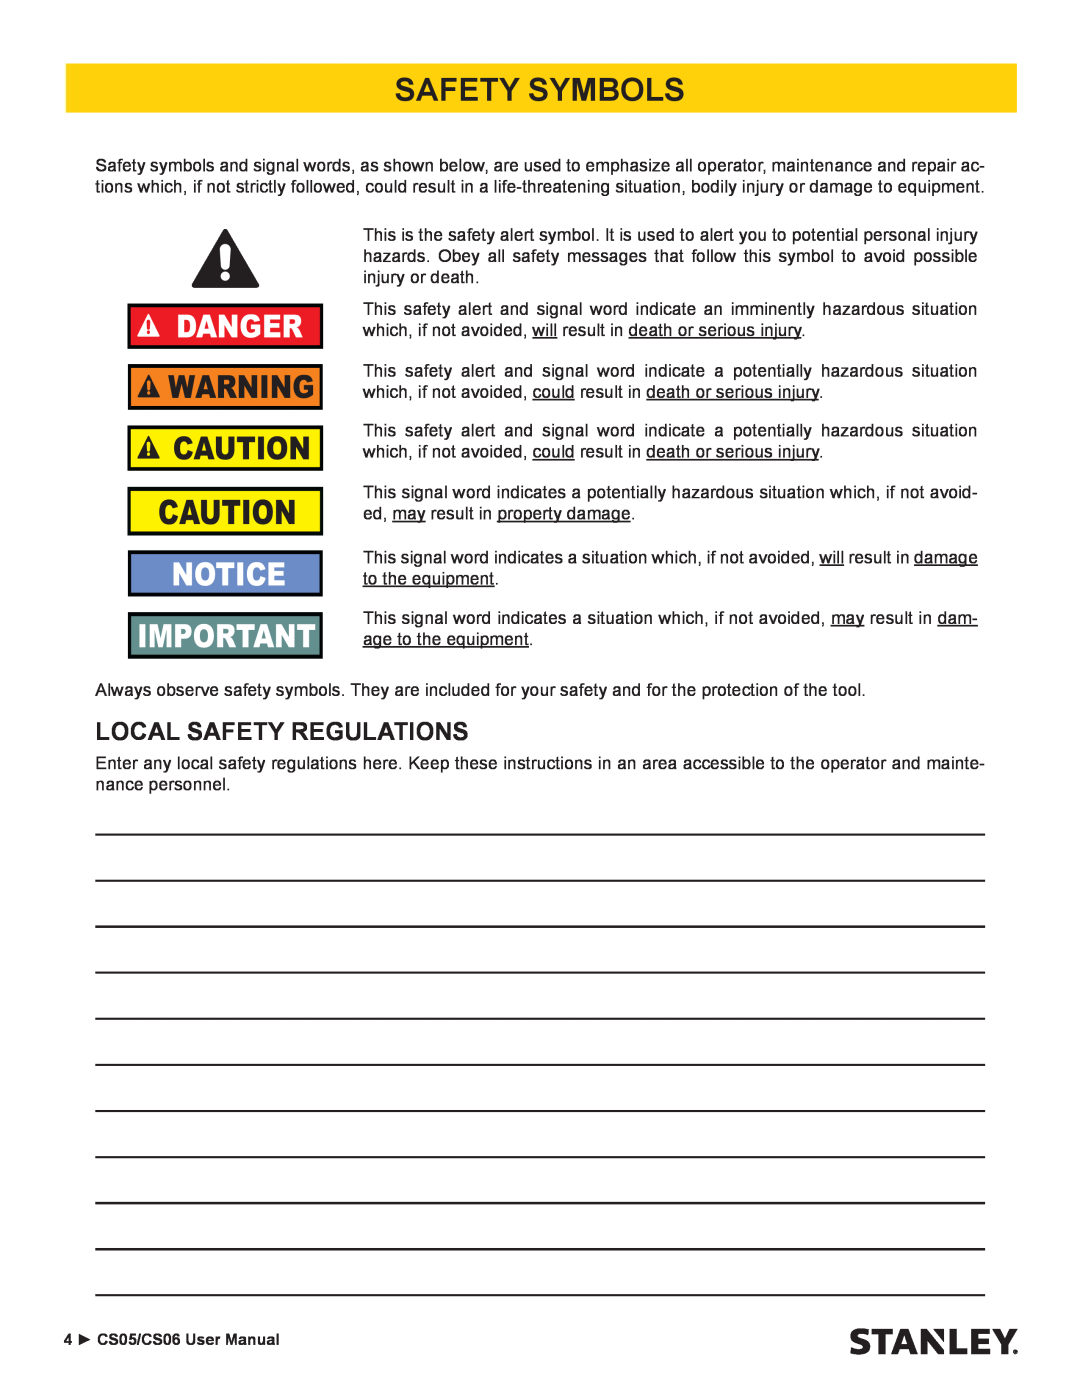 Stanley Black & Decker CS06, CS05 manual Safety Symbols, Local Safety Regulations, Danger 